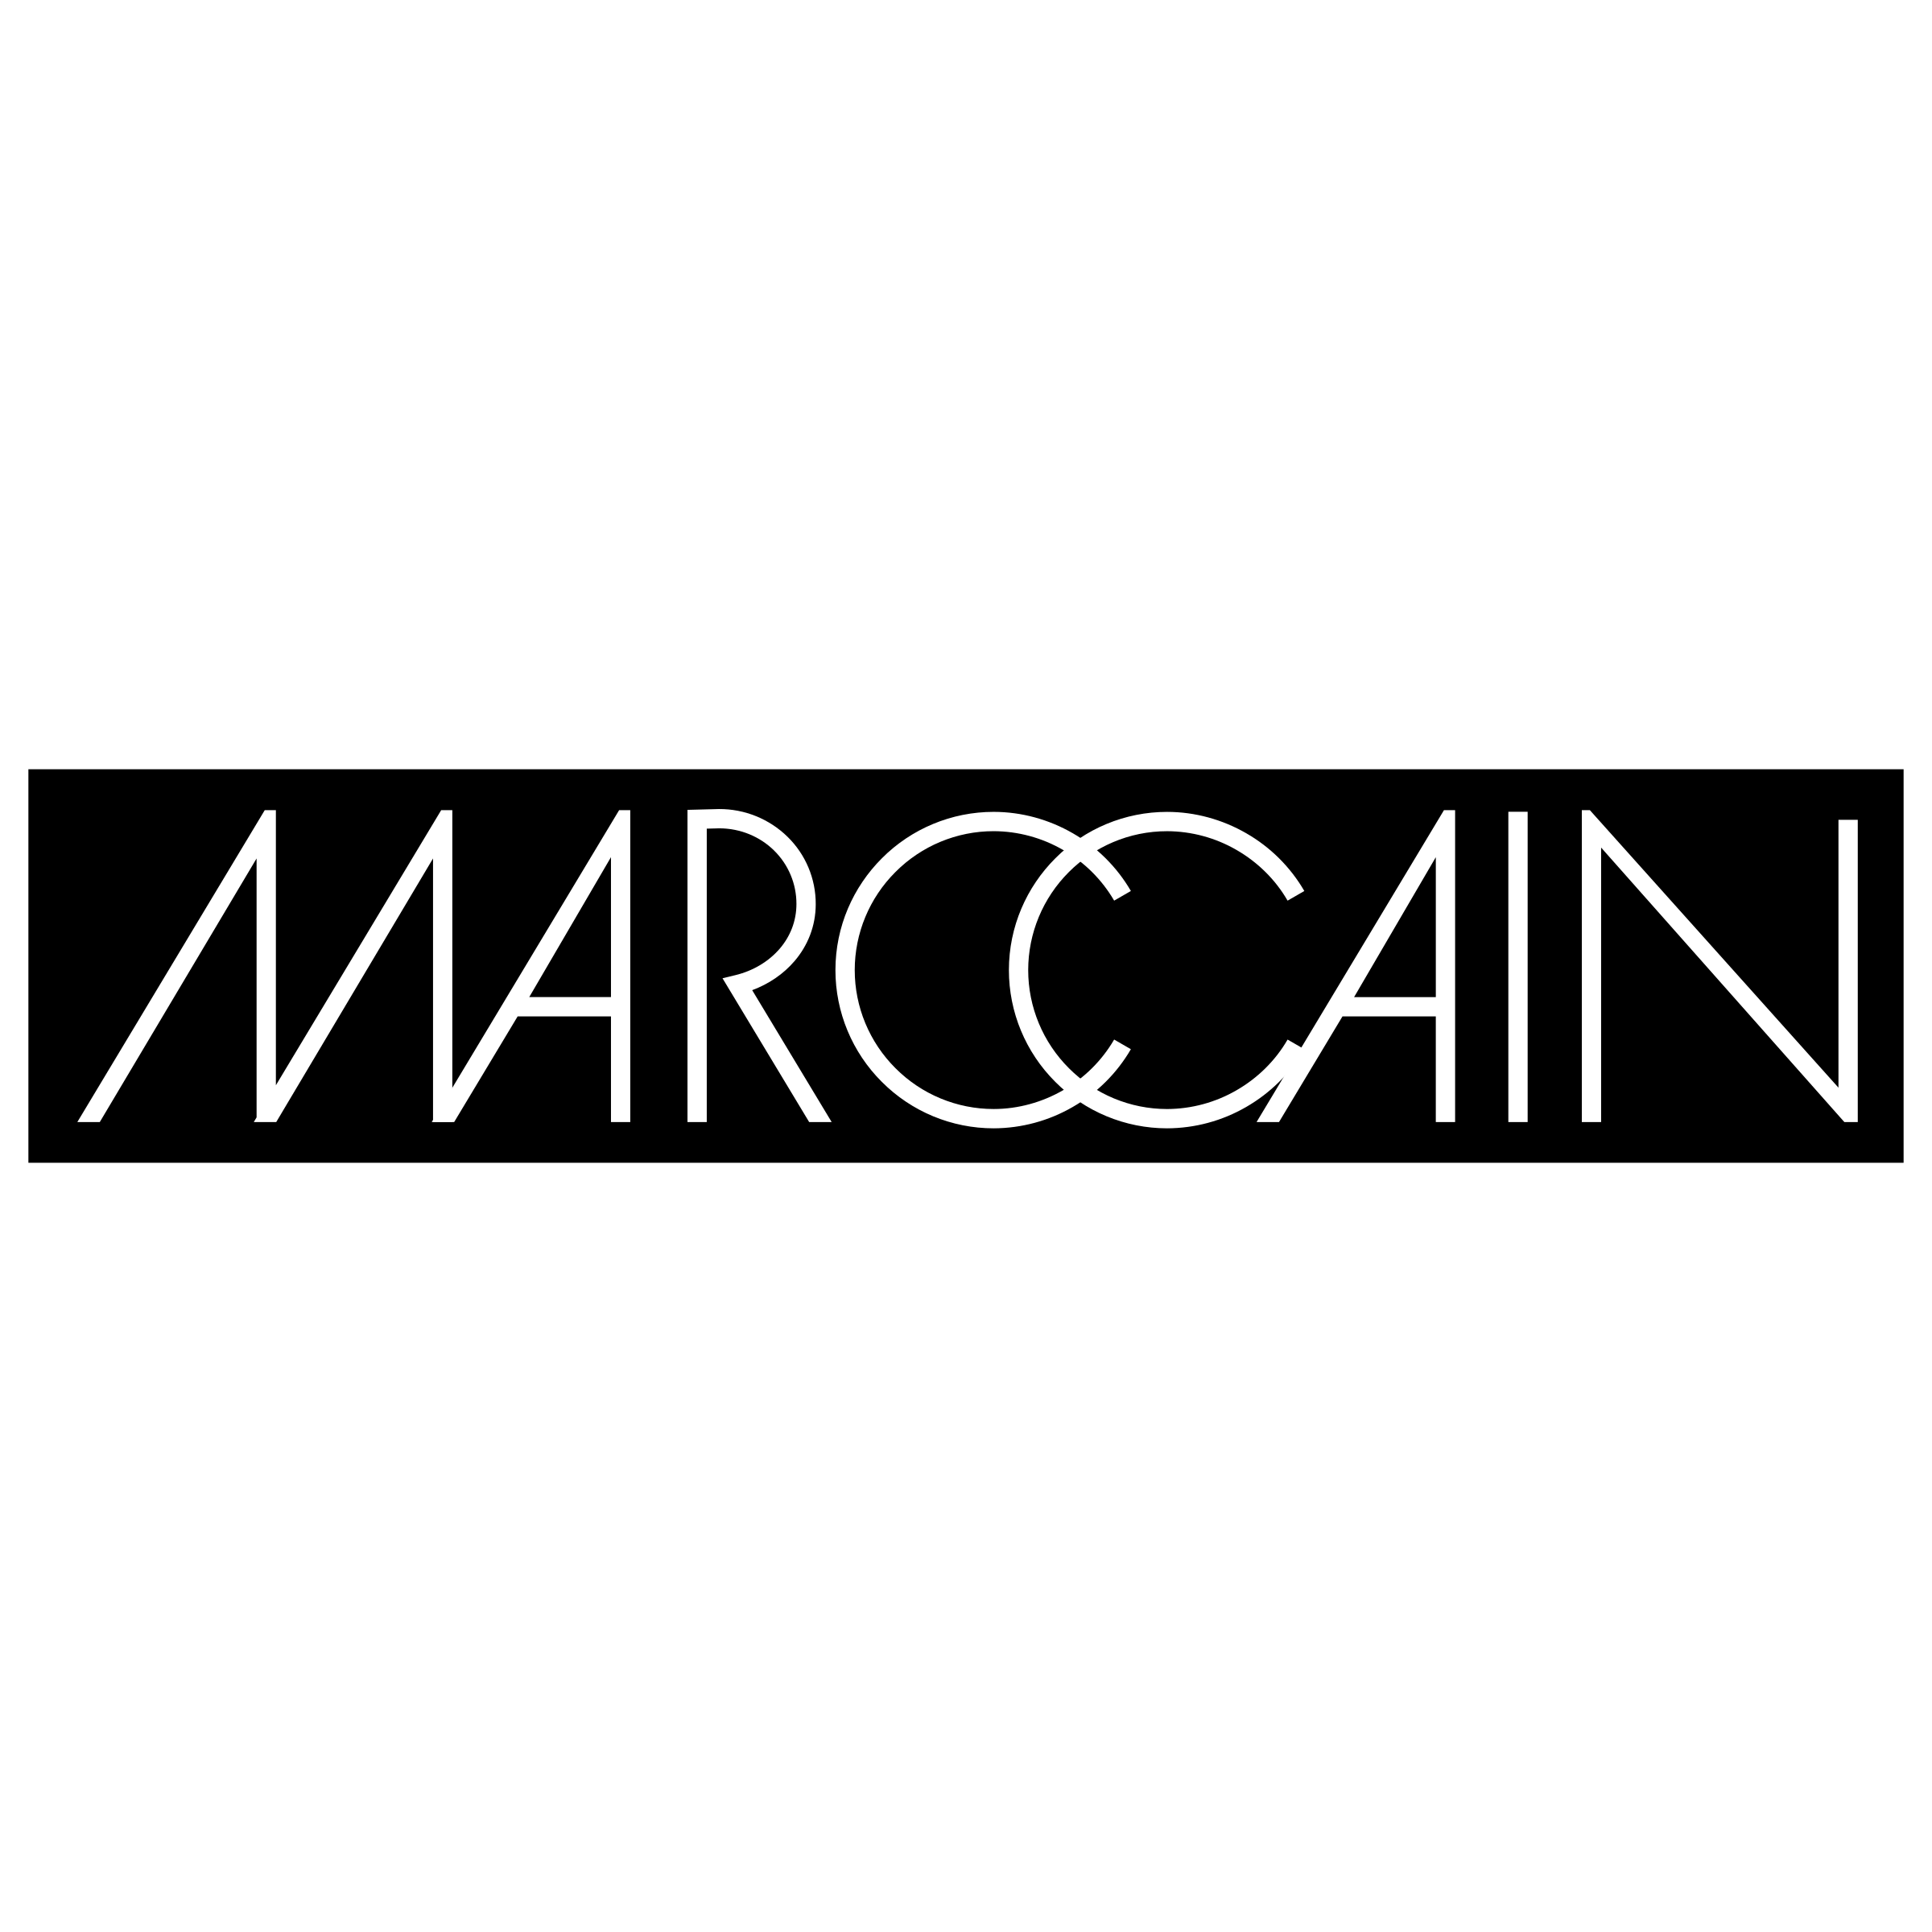 Marc Logo - Marc Cain Logo PNG Transparent & SVG Vector